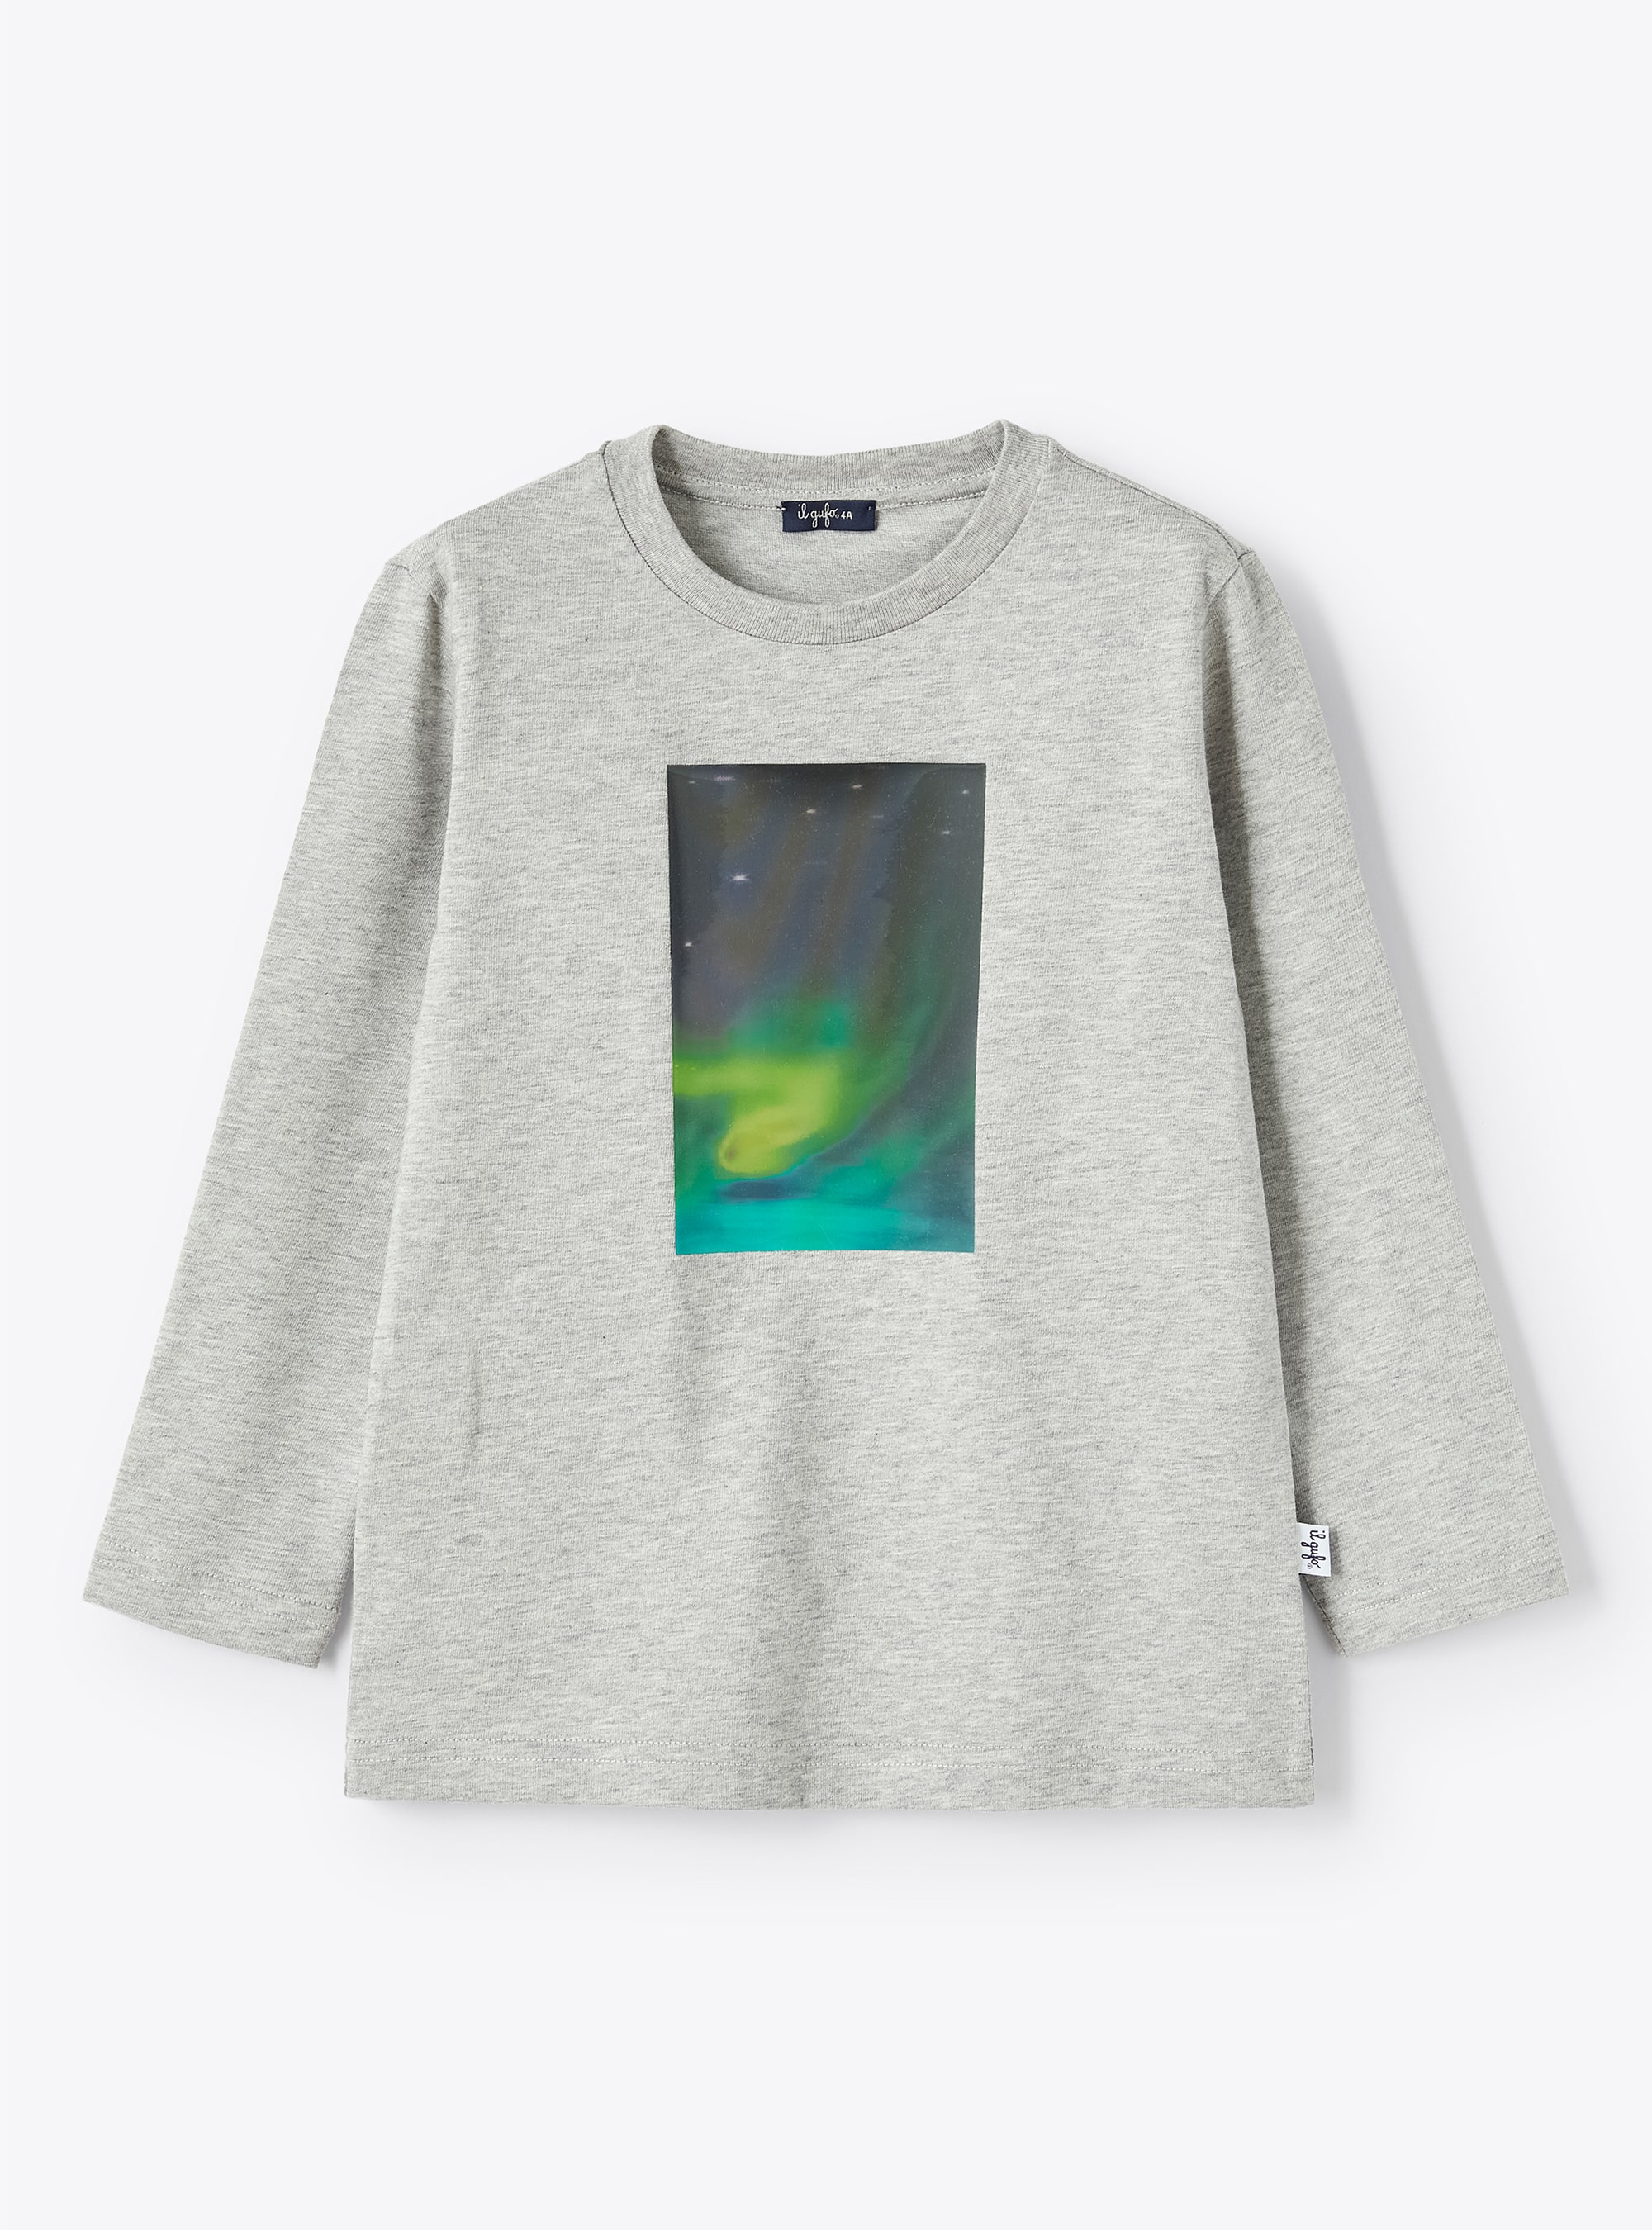 Hologram grey jersey top - T-shirts - Il Gufo